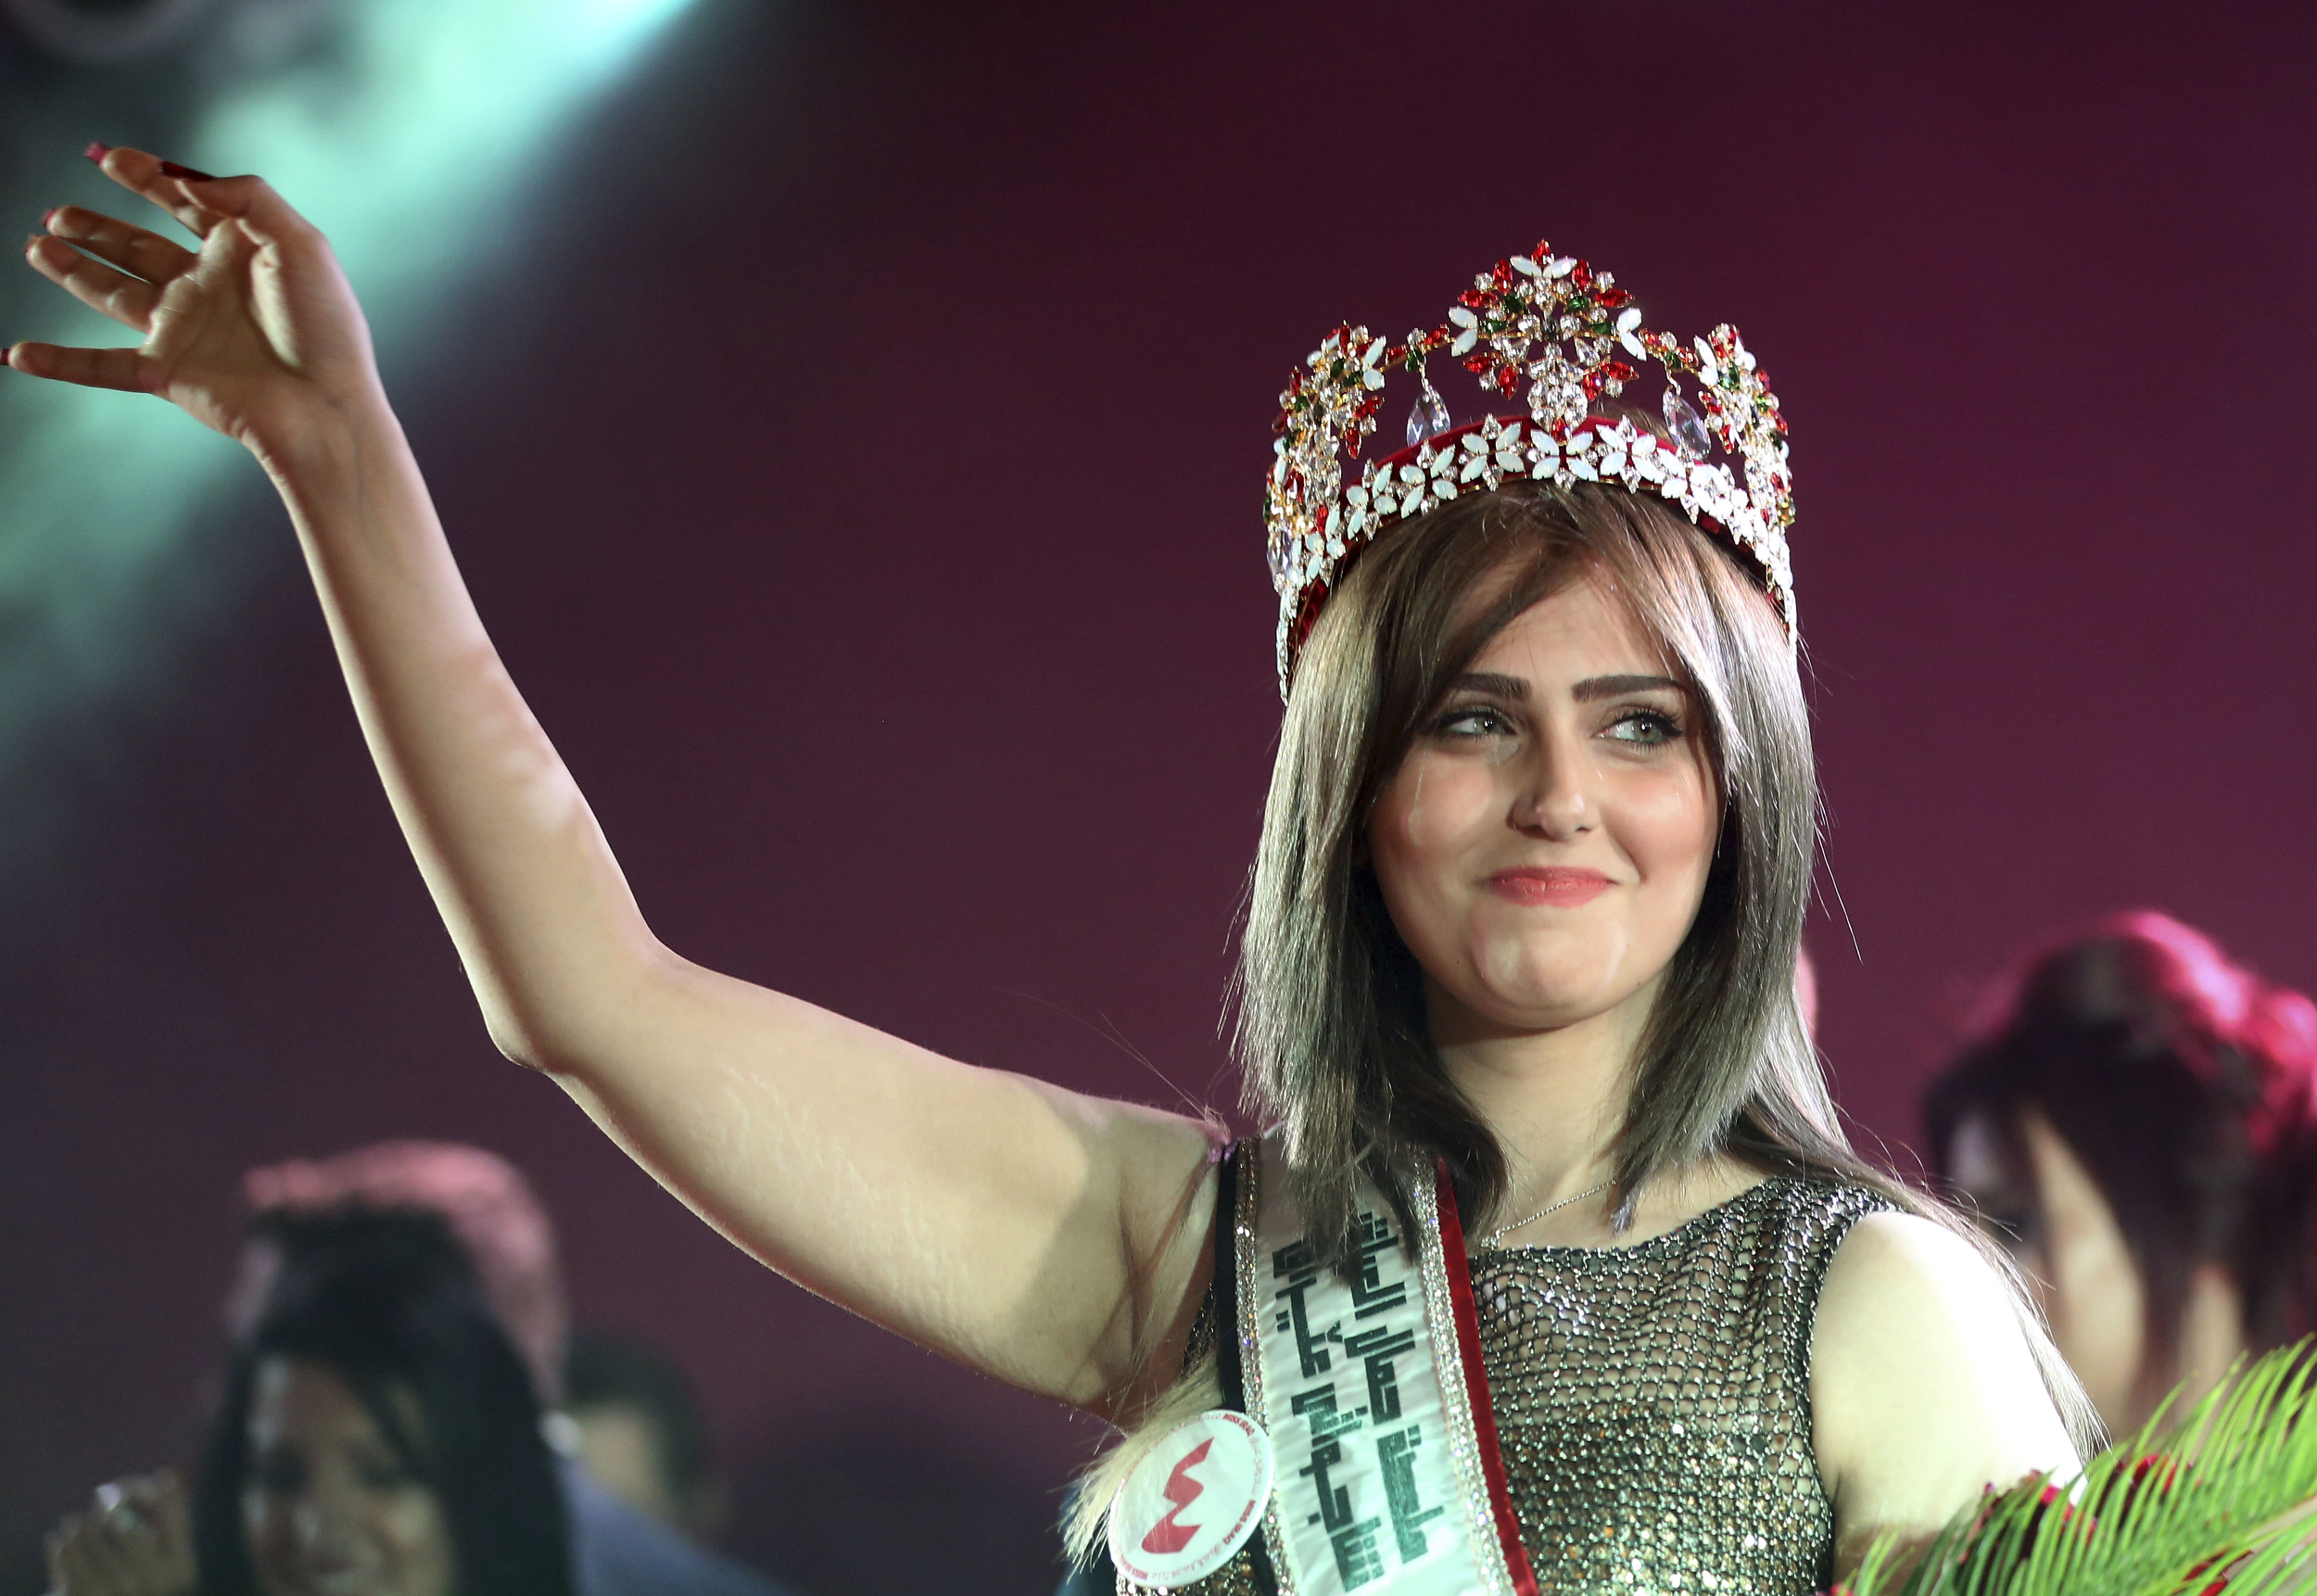 Shaima Qassim, celebrates after being crowned at the end of the 2015 Miss Iraq Final in Baghdad, Iraq on Dec. 19, 2015. (Karim Kadim—AP)